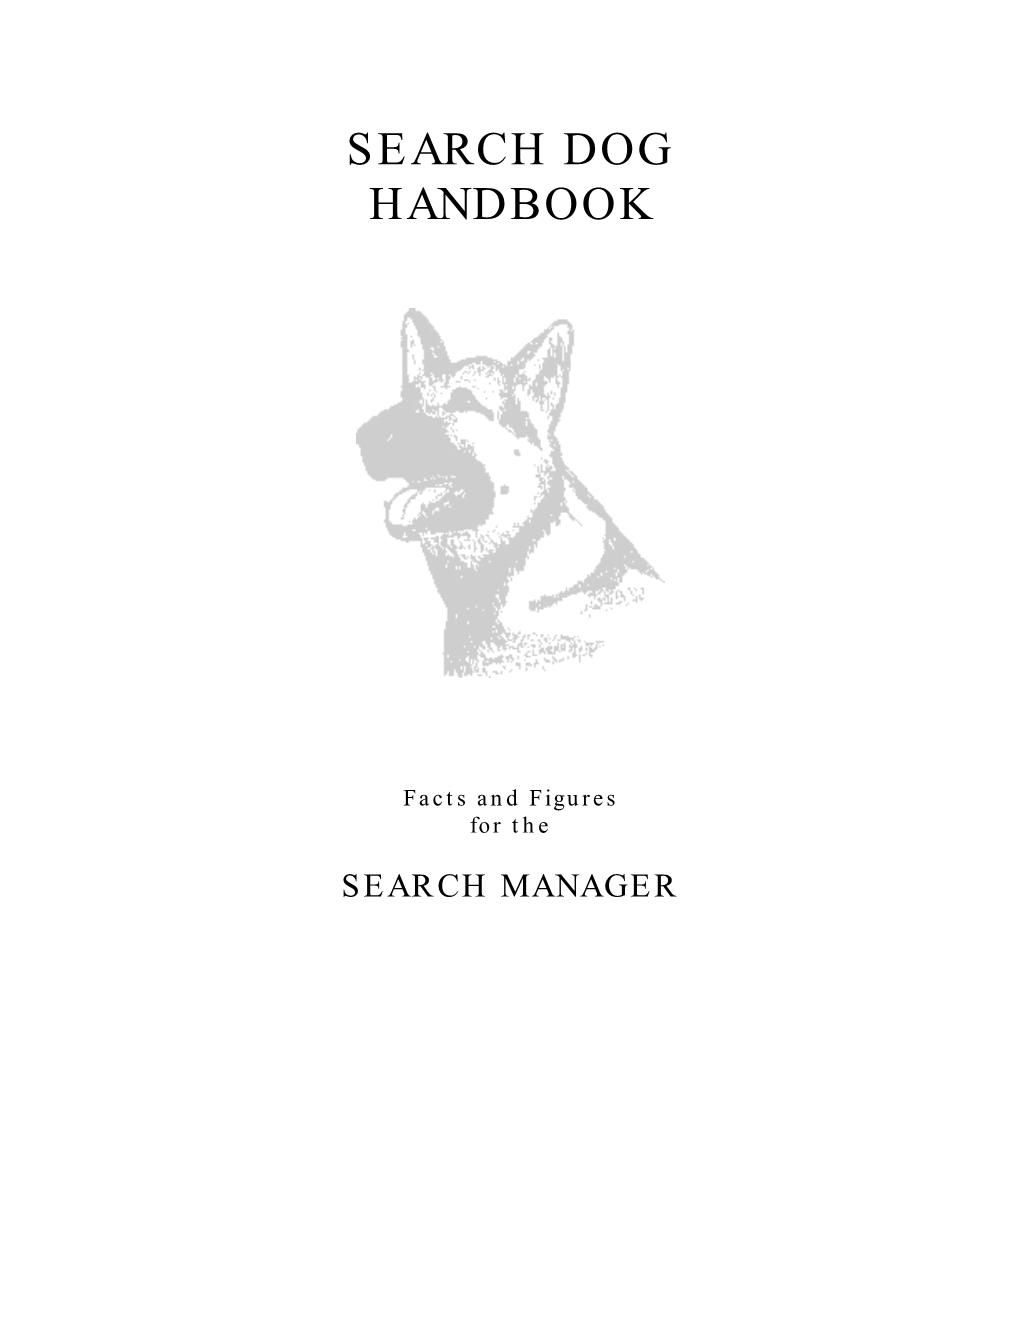 Search Dog Handbook